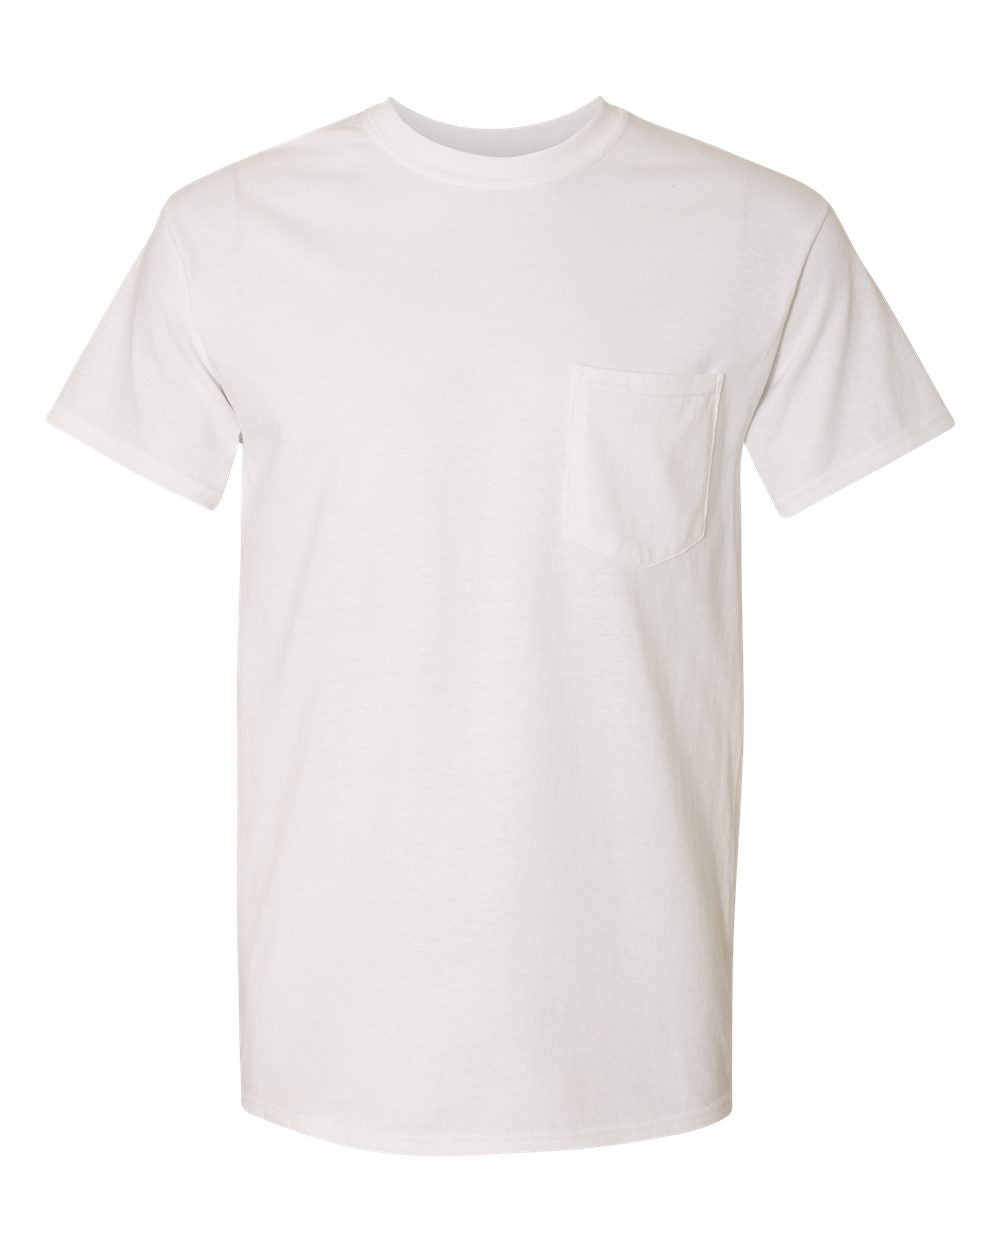 Pretreated Gildan 5300 Heavy Cotton Pocket T-Shirt